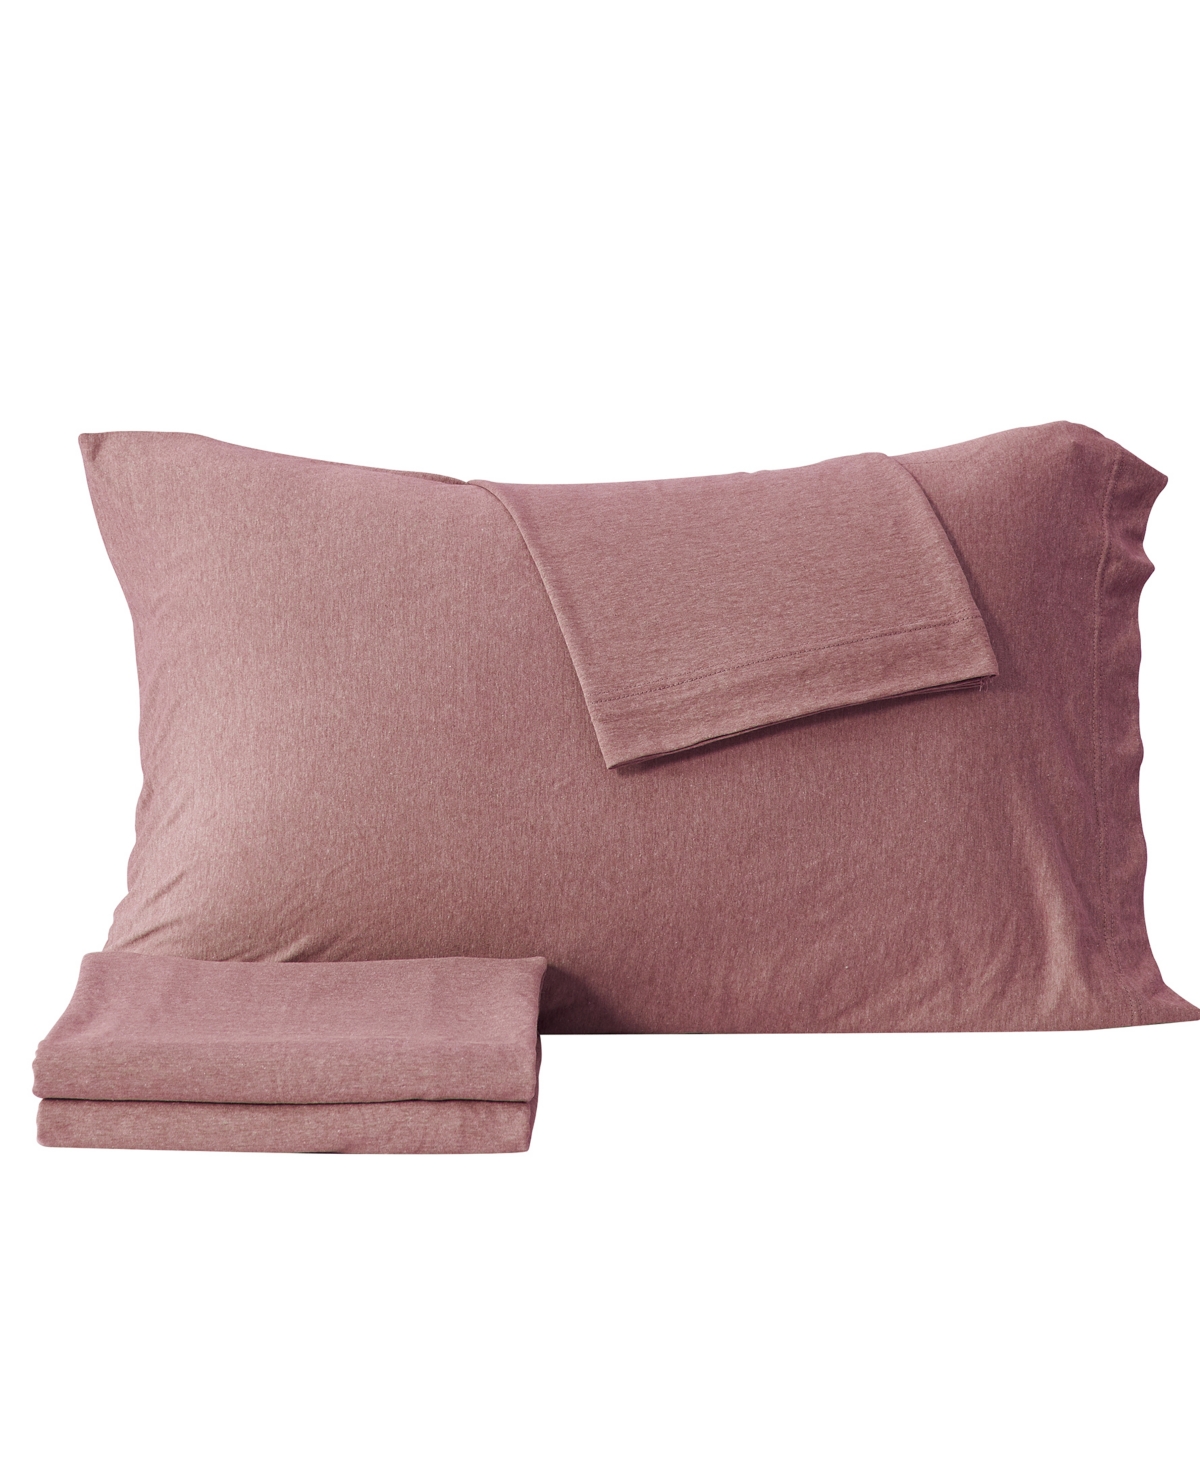 Premium Comforts Heathered Melange T-shirt Jersey Knit Cotton Blend 4 Piece Sheet Set, Full In Heathered Dusty Rose